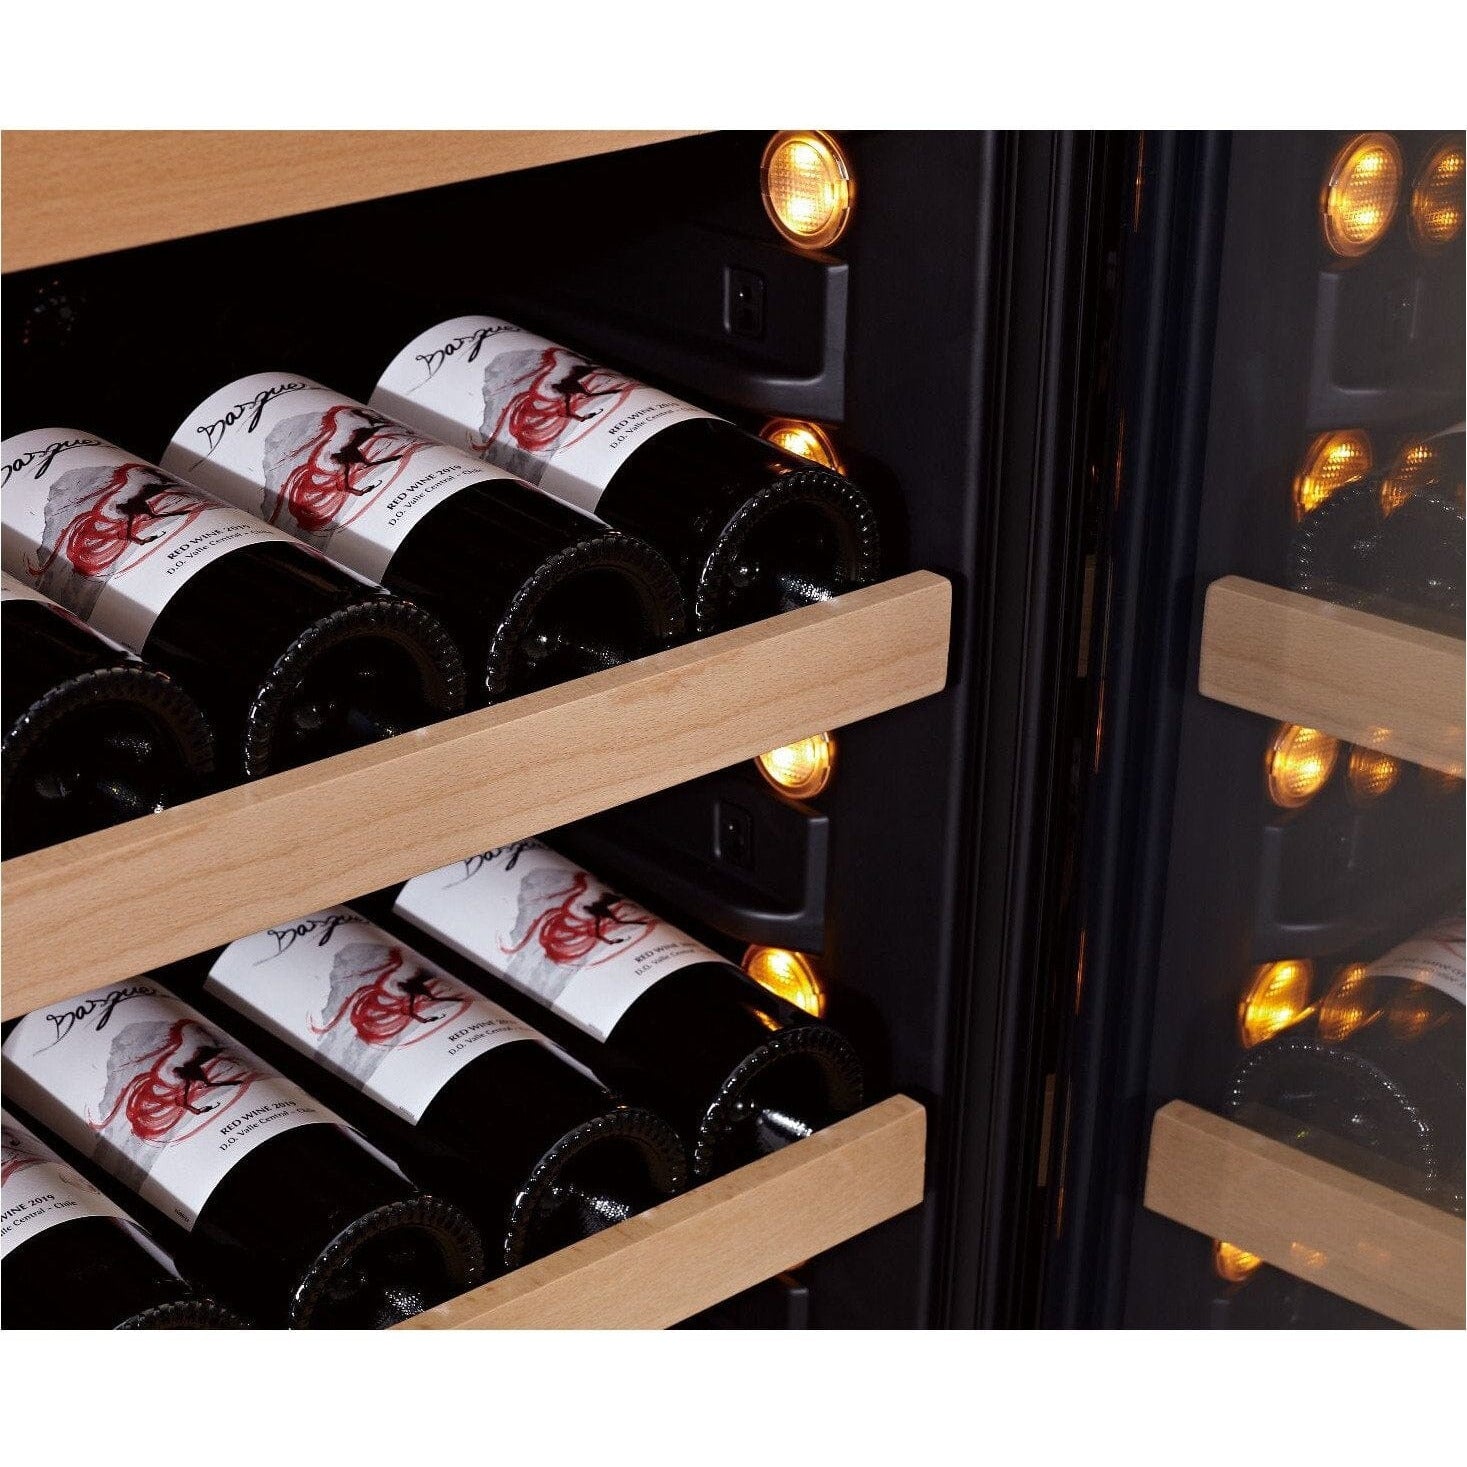 SWISSCAVE Premium - 600mm Dual Zone - 40 Bottle - Freestanding / Built in Wine Cooler - WLB-160DF